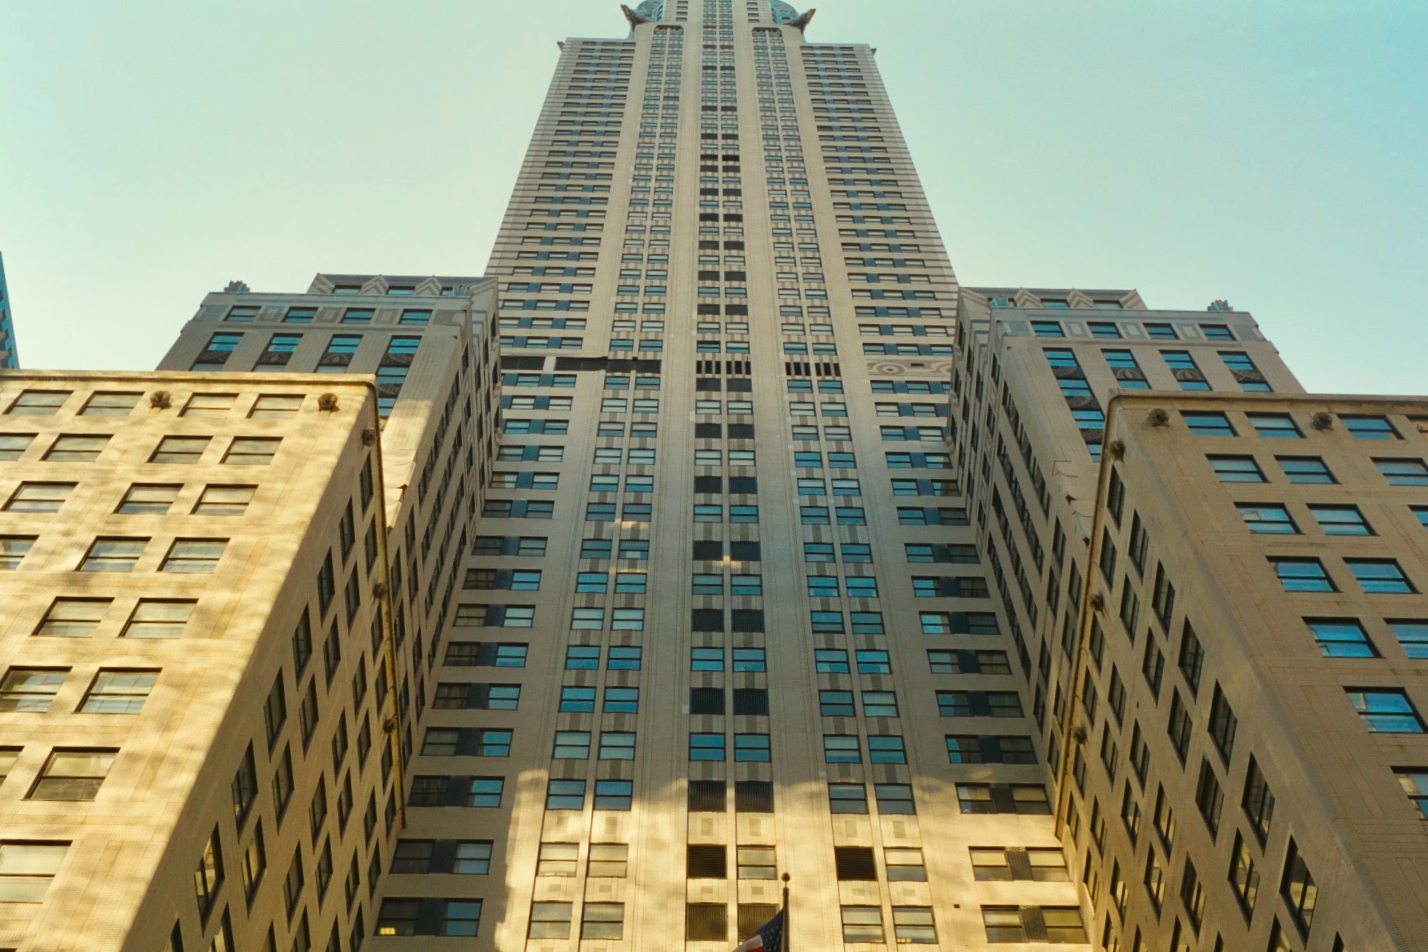 The Chrysler building, Manhattan, New York.